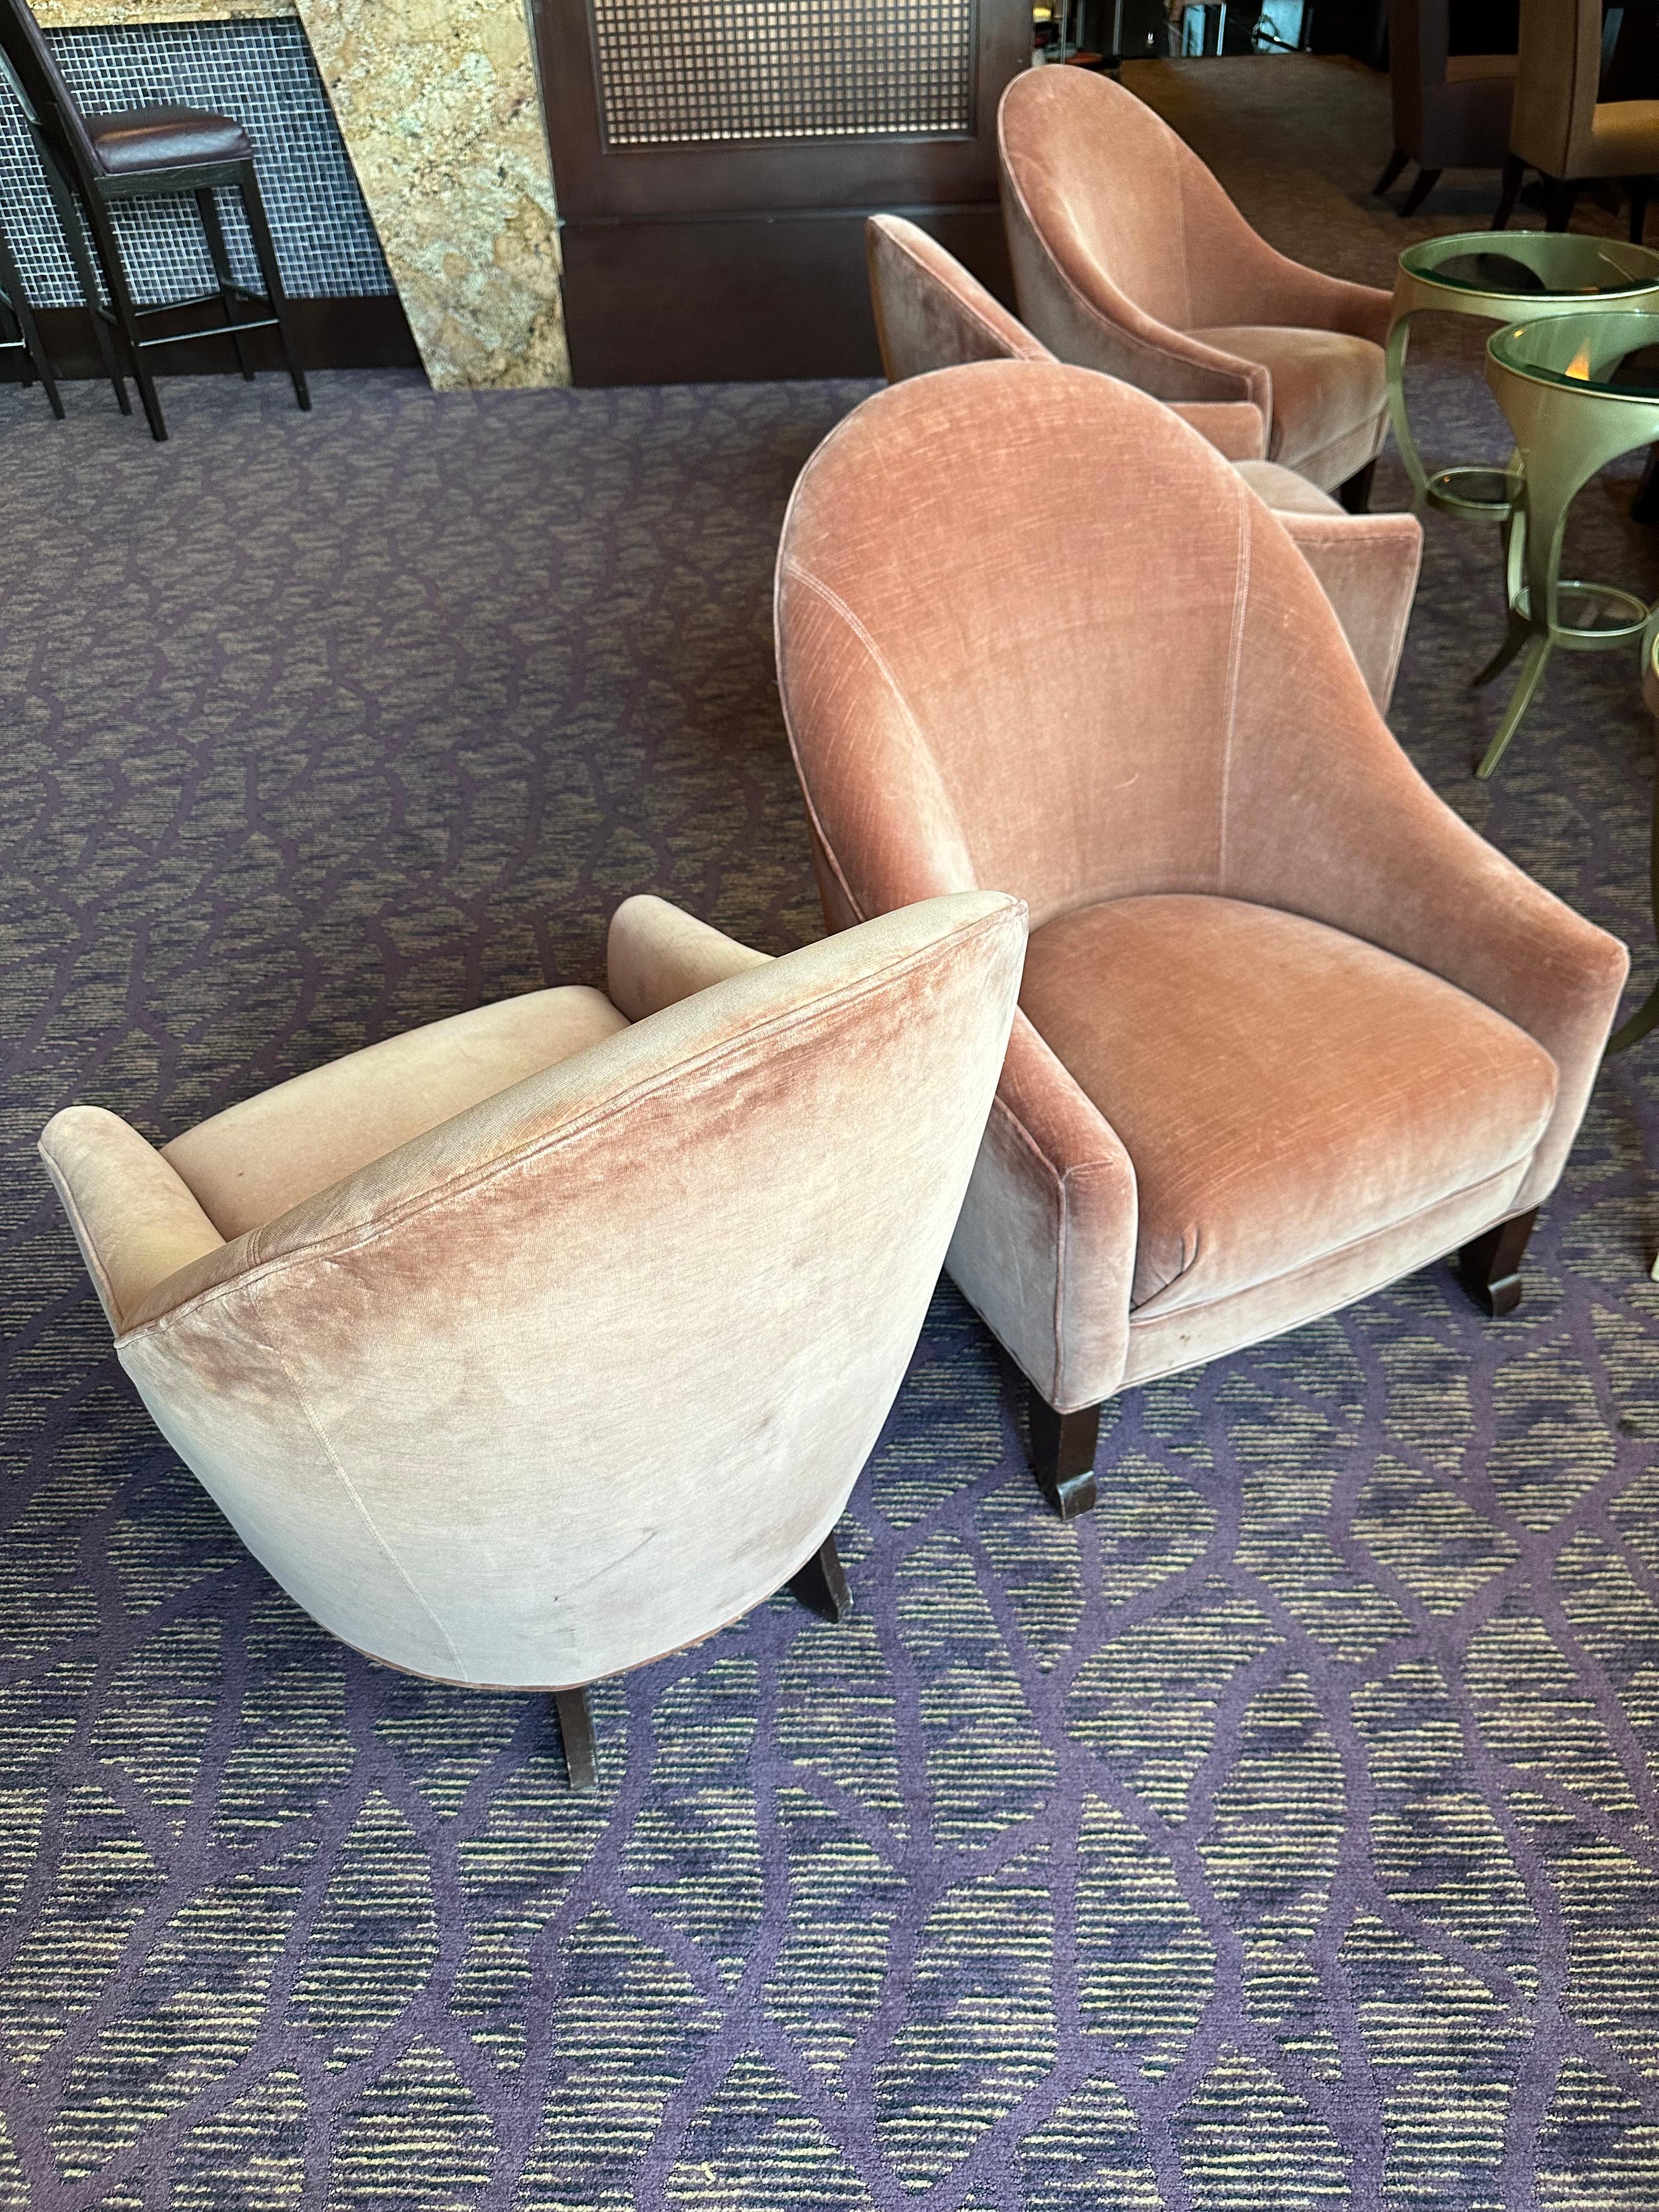 27"W x 27"D x 37.5"H Decor Fabric Cocktail Chair